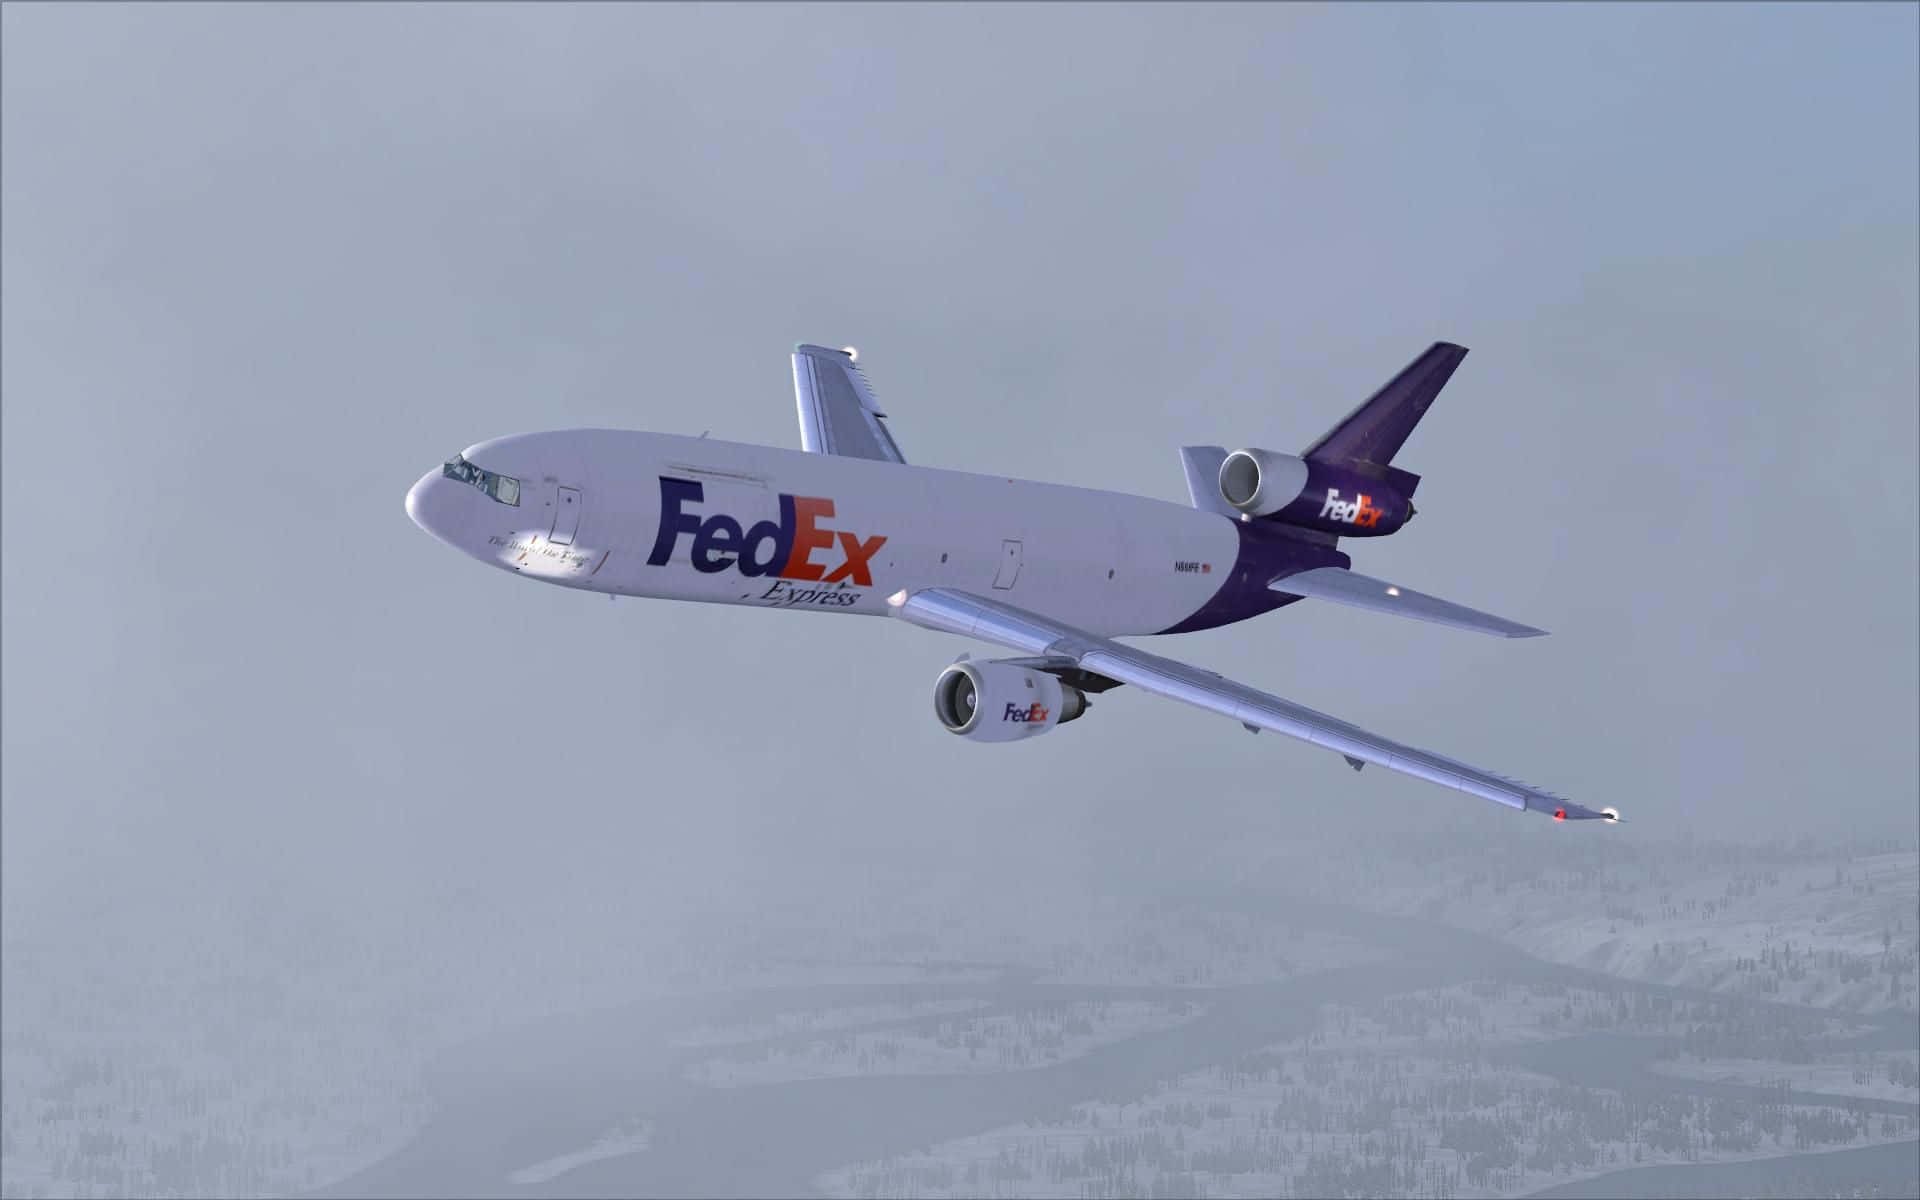 Celebrating 50 Years of Innovation at Fedex